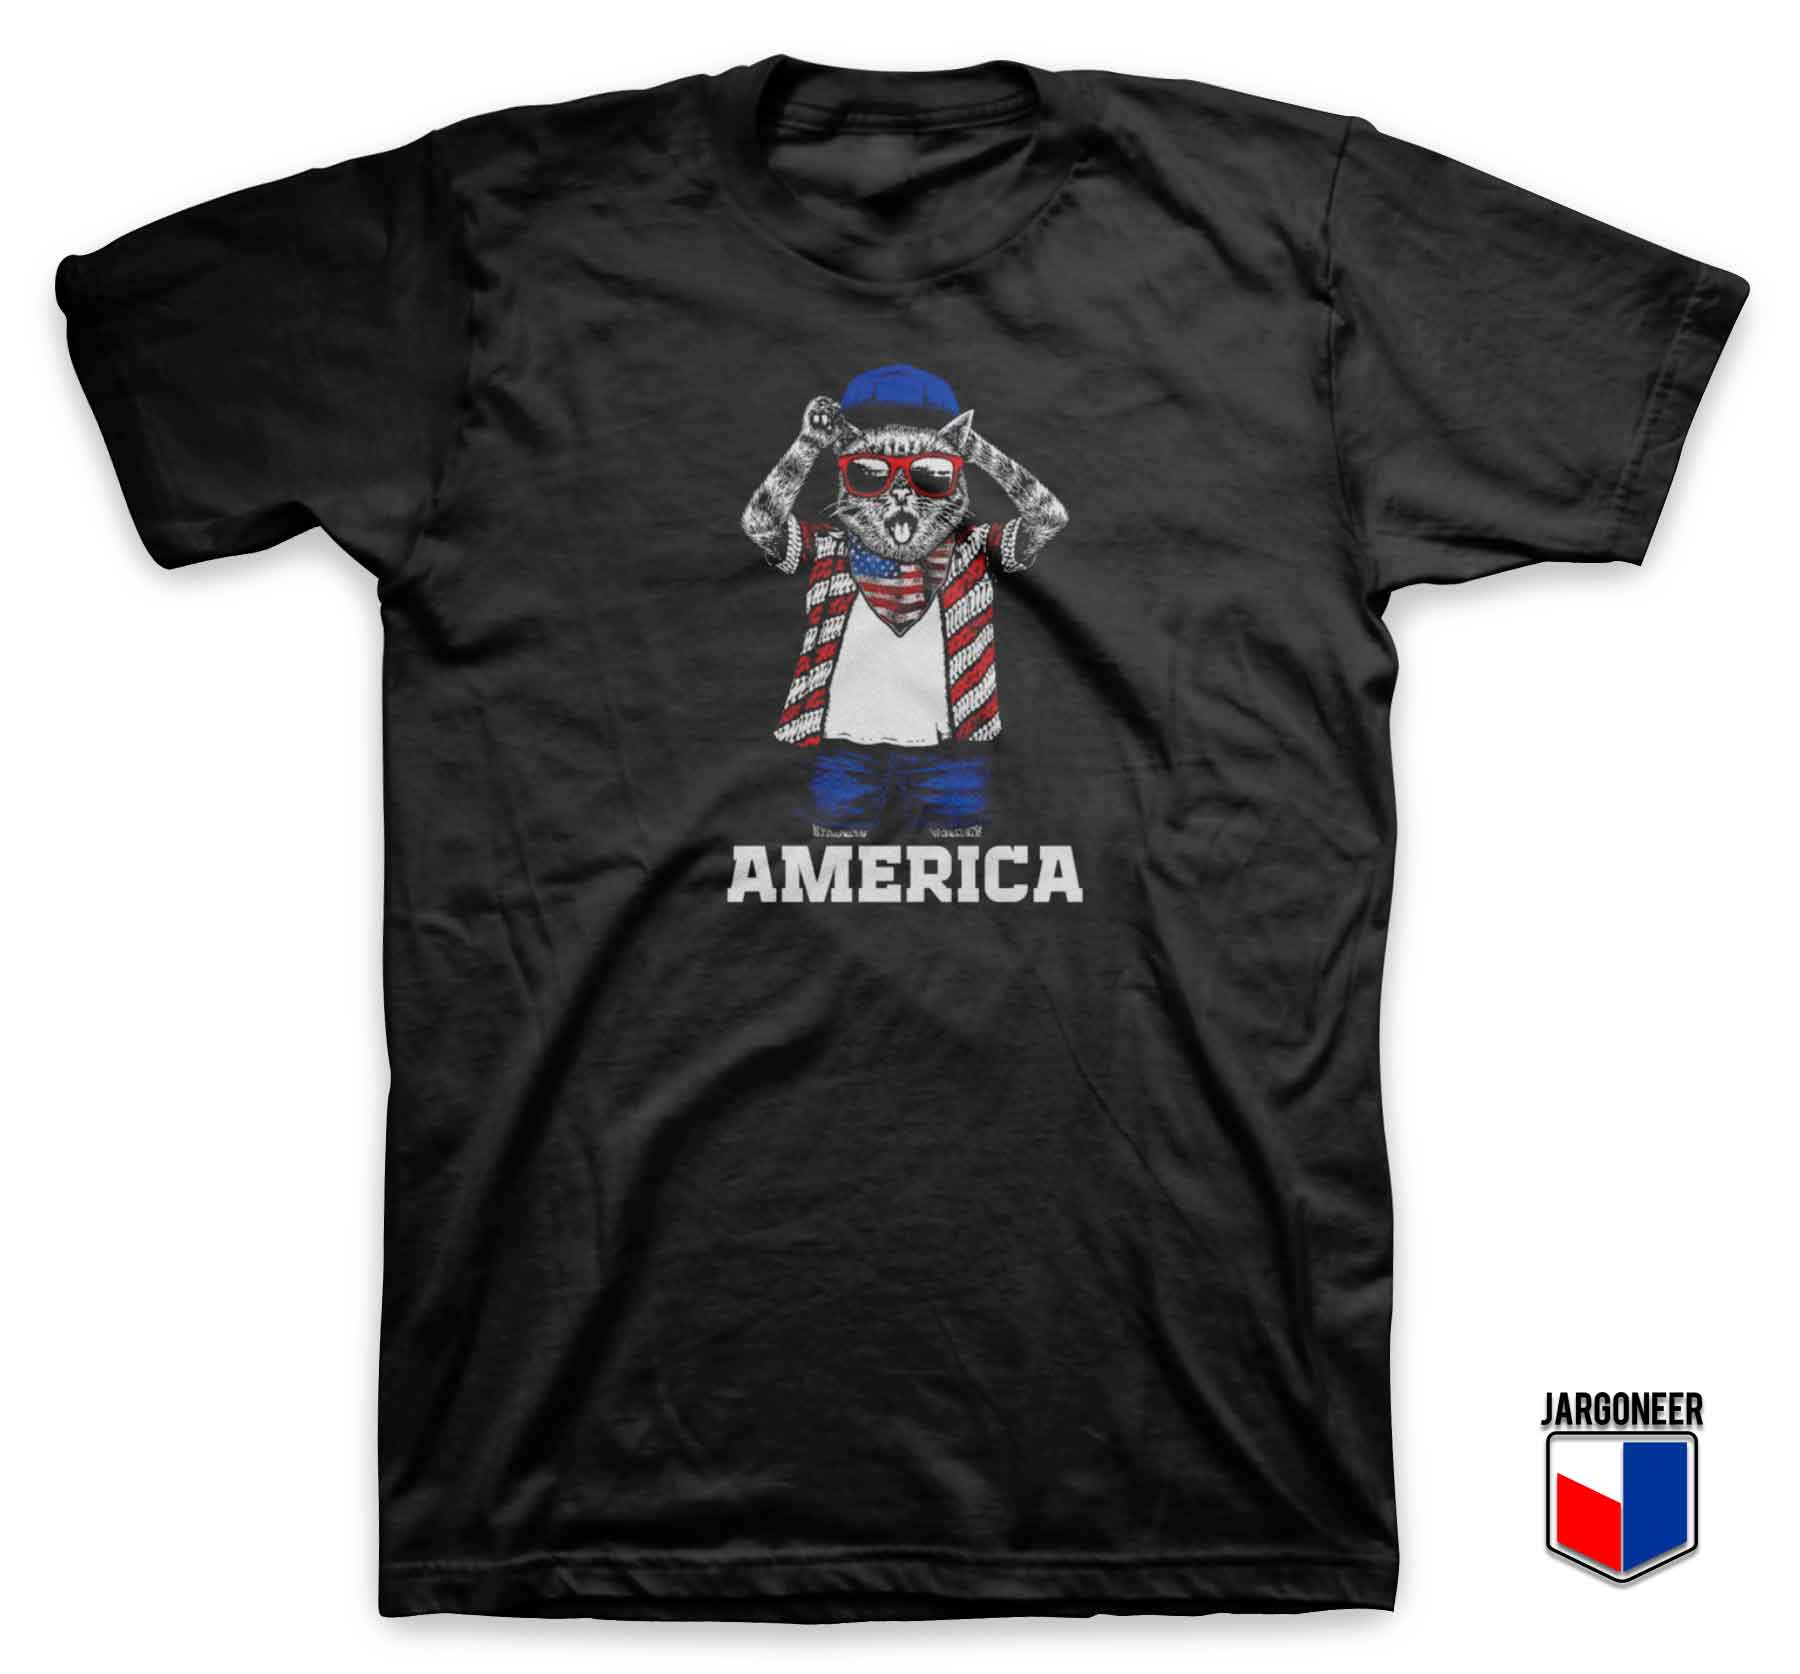 Americat America Parody T Shirt - Shop Unique Graphic Cool Shirt Designs